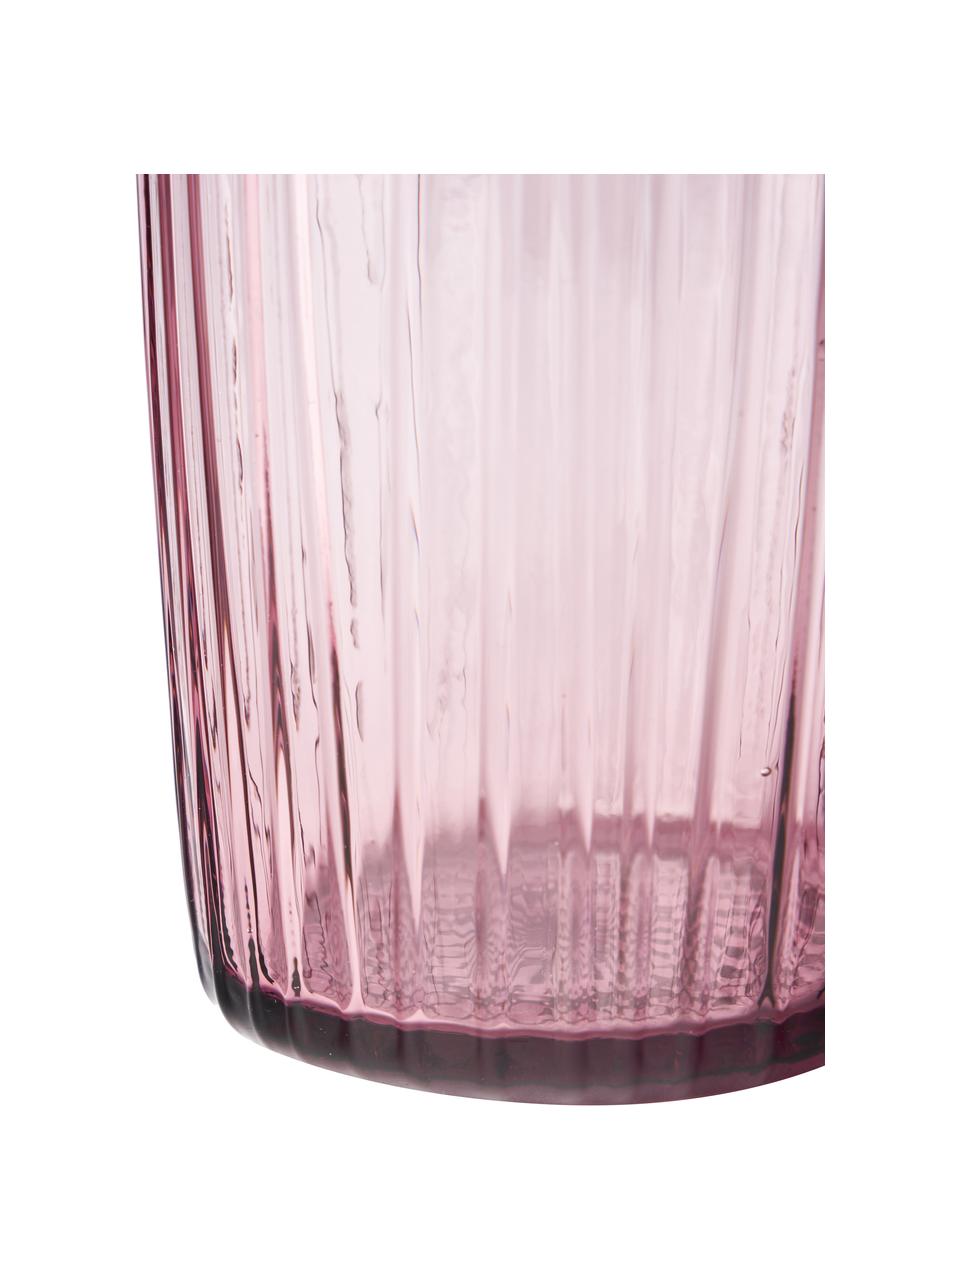 Bicchiere con superficie scanalata Kusintha 4 pz, Vetro, Rosa, Ø 7 x Alt. 10 cm